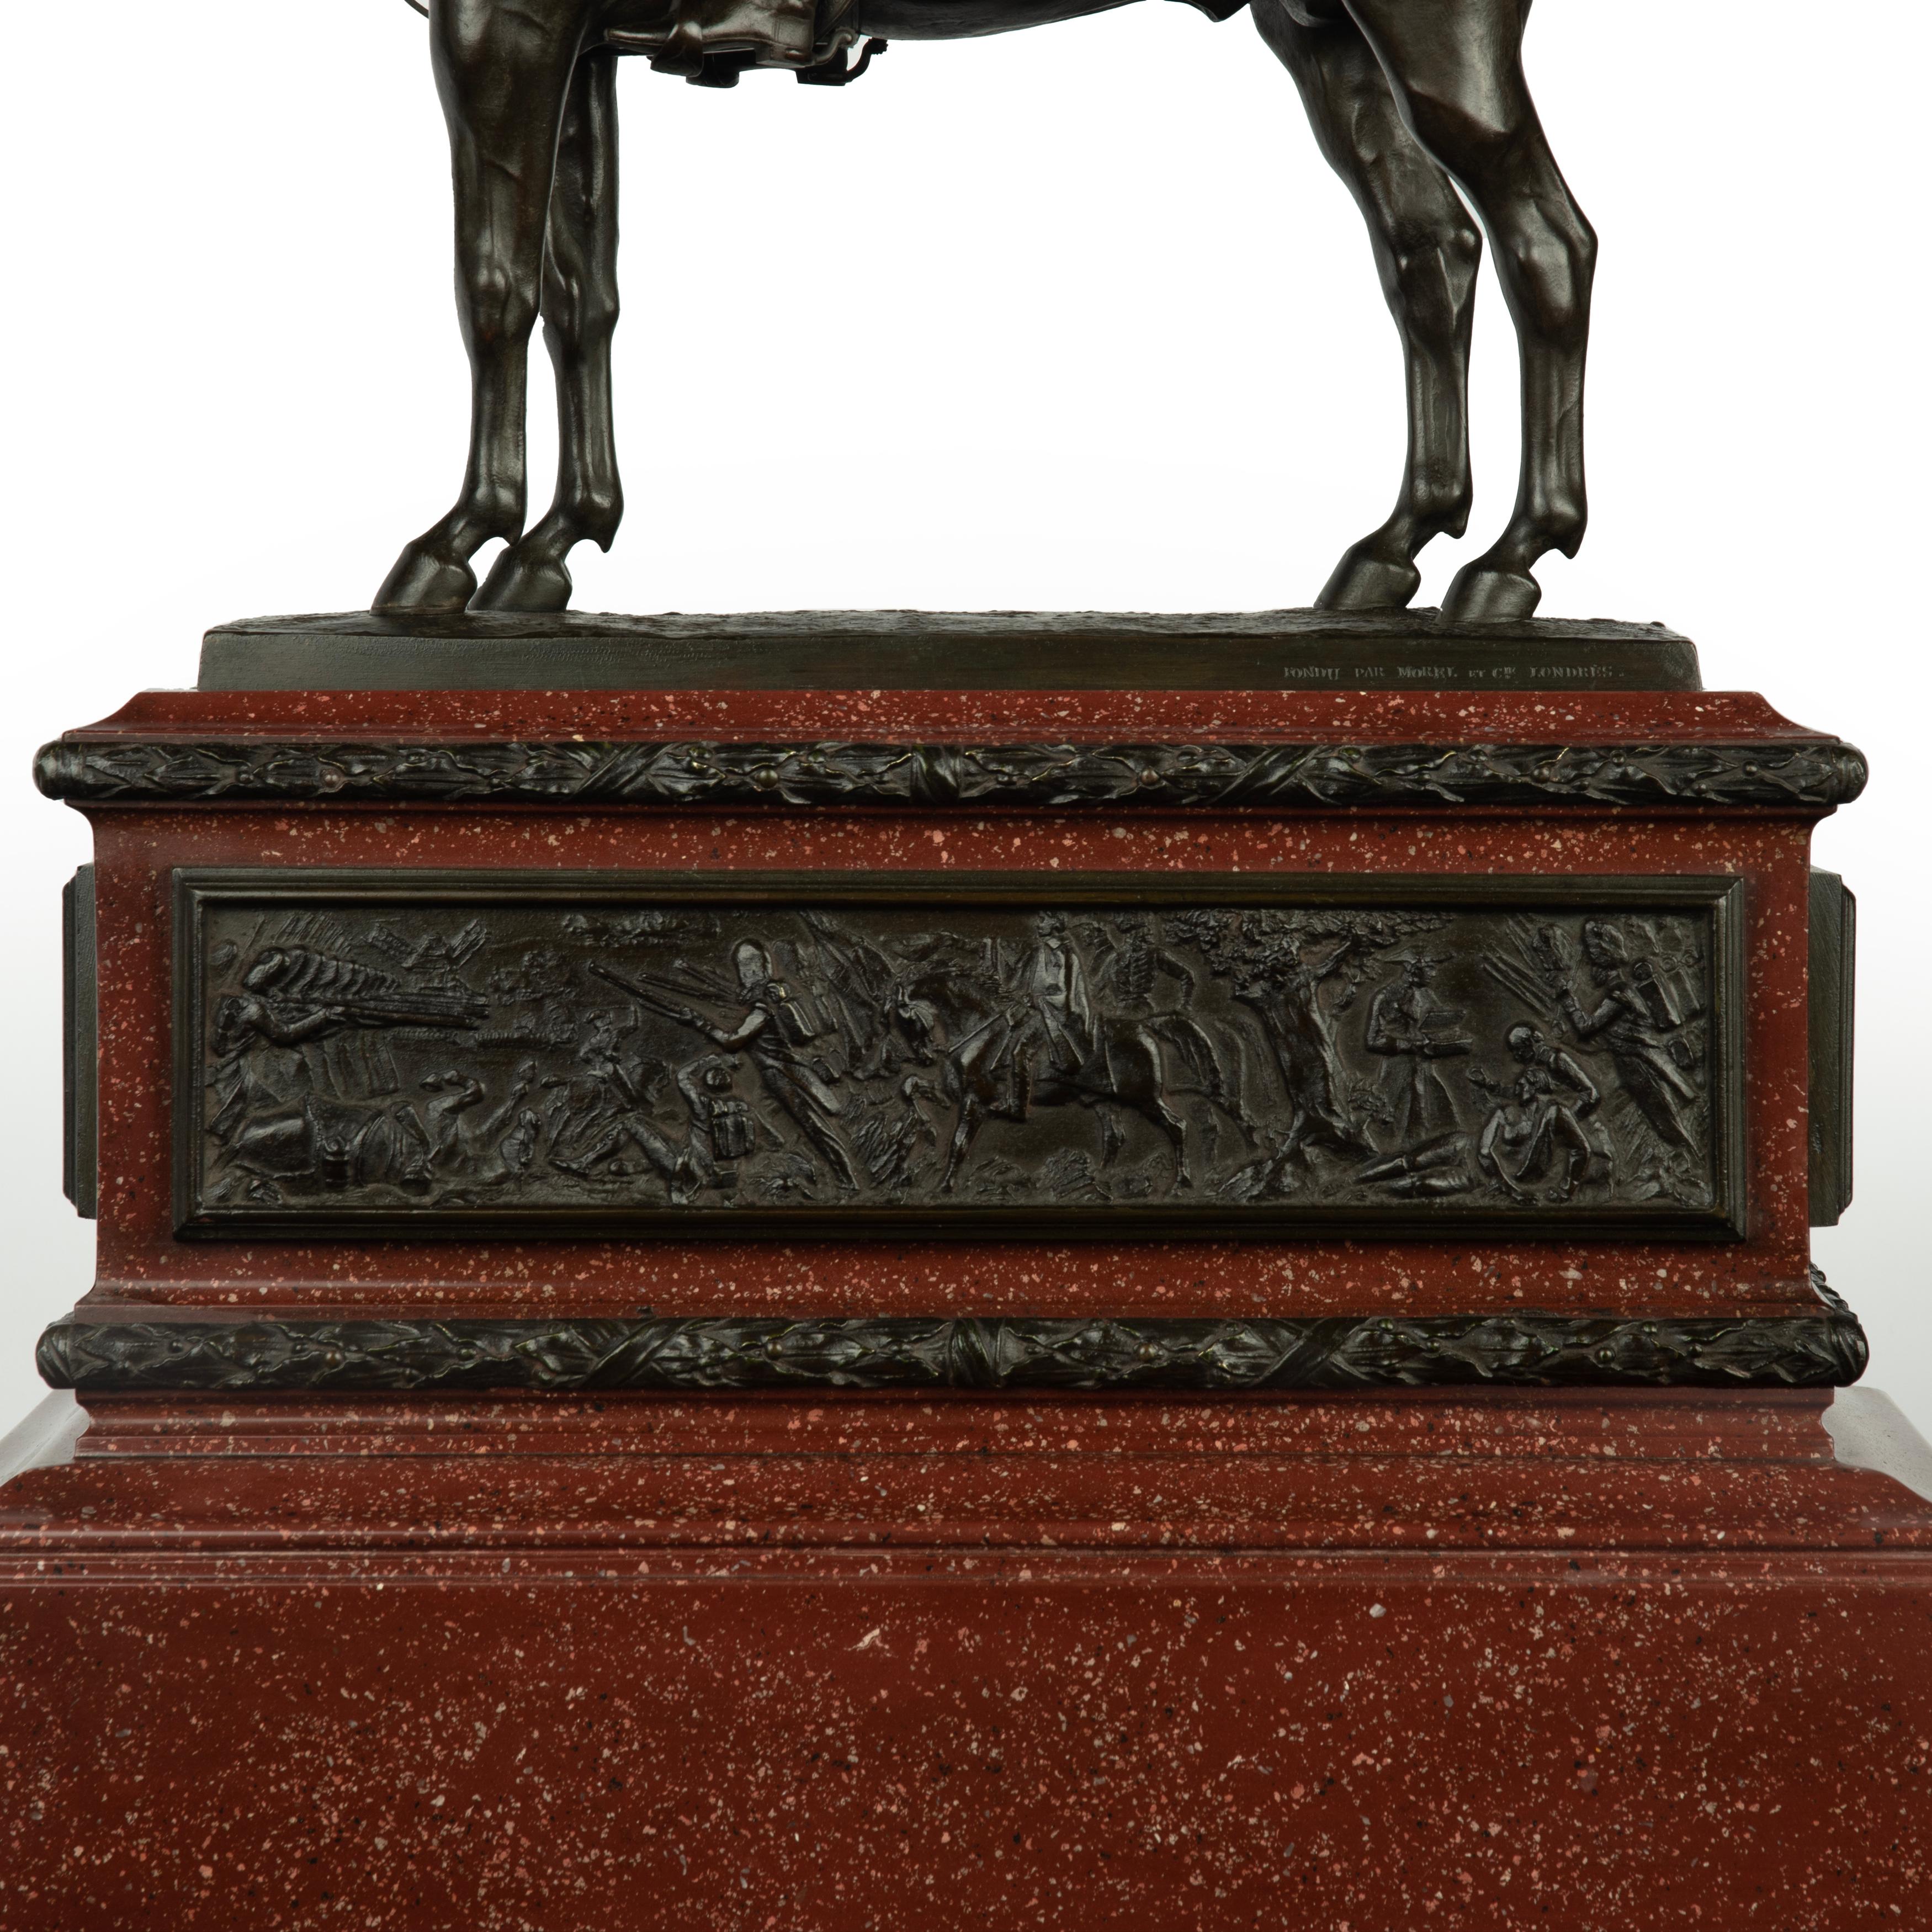 Bronze An equestrian statuette of the Duke of Wellington by Morel after Marochetti